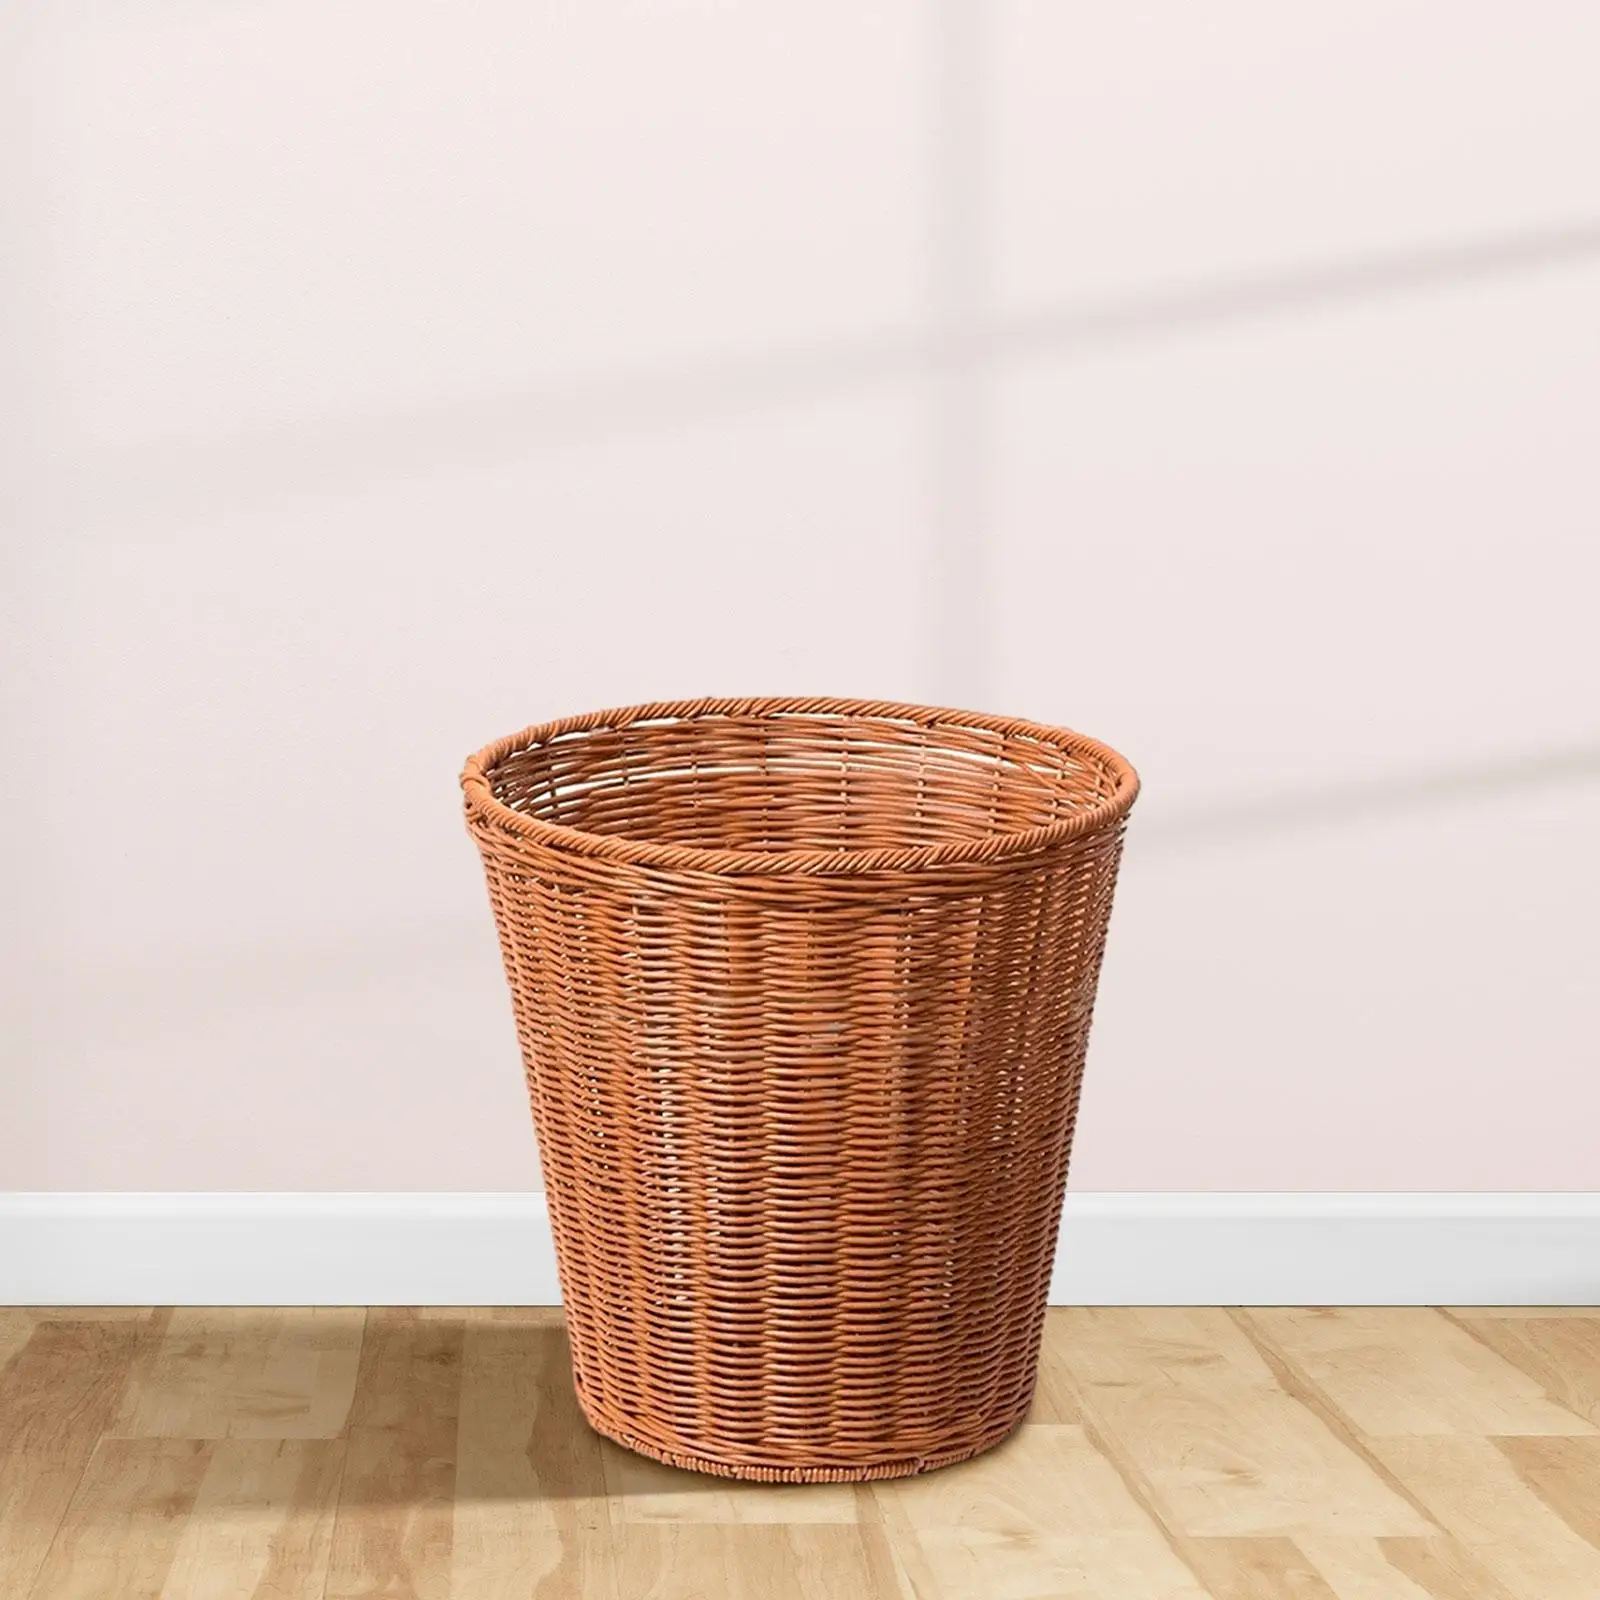 Wicker Trash Can Woven Wastebasket Round Imitation Rattan Waste Basket Laundry Hamper for Living Room Home Dorm Office Playroom